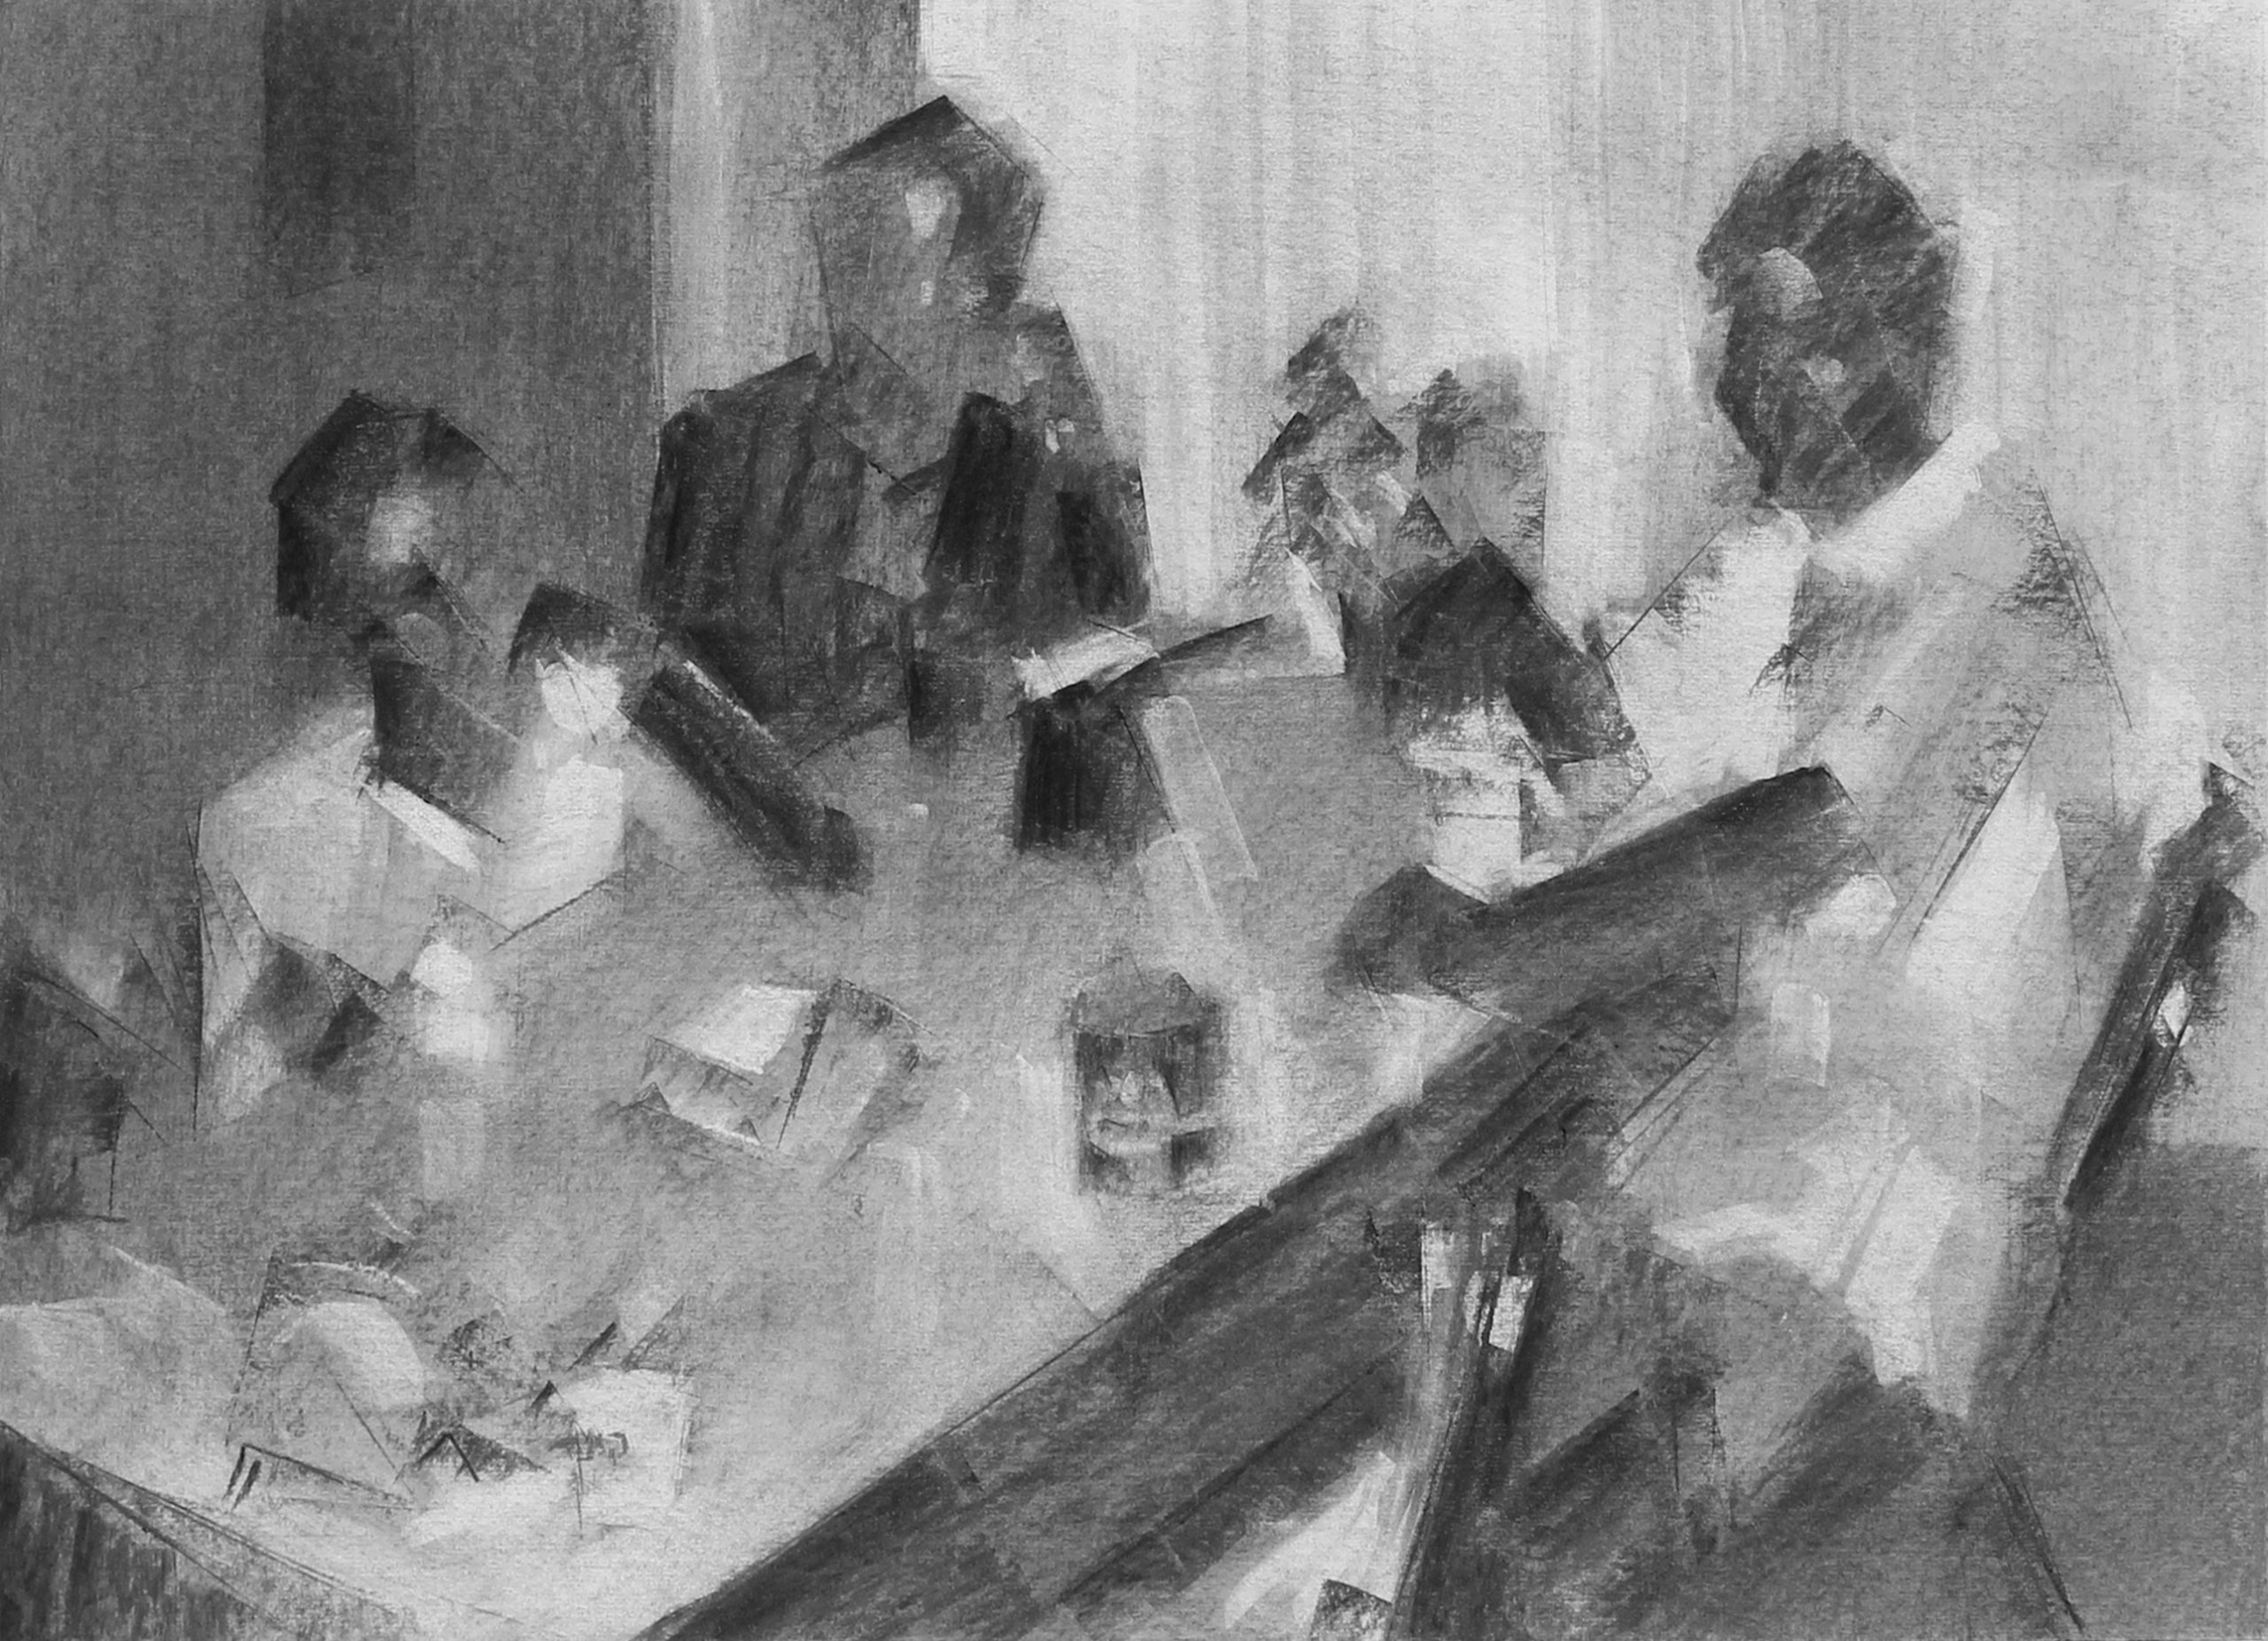 Tigist Yoseph Ron, Hashahar Haole
2022, Charcoal on paper, 52 x 38 cm